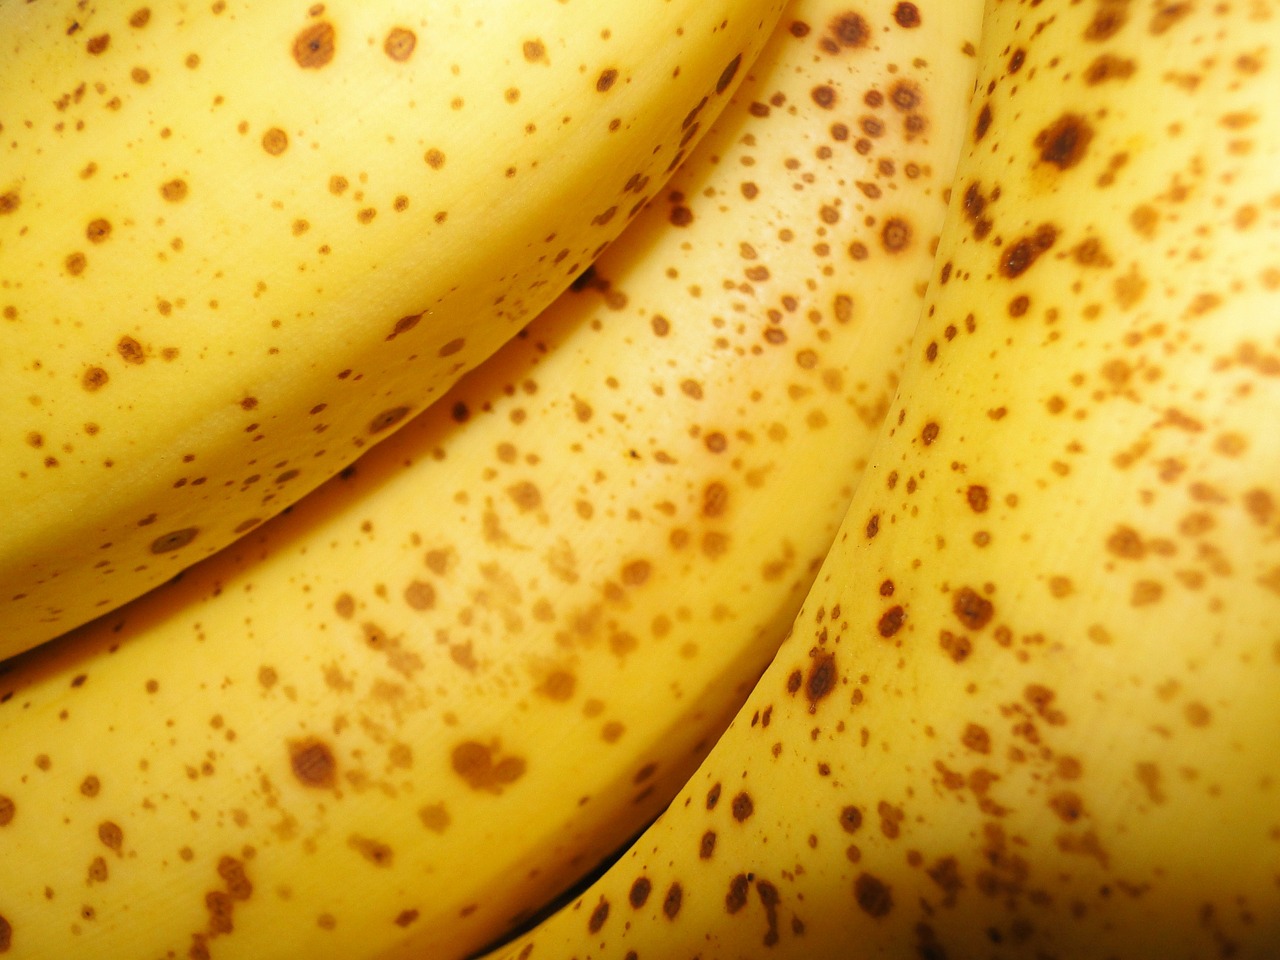 bananas yellow spots free photo